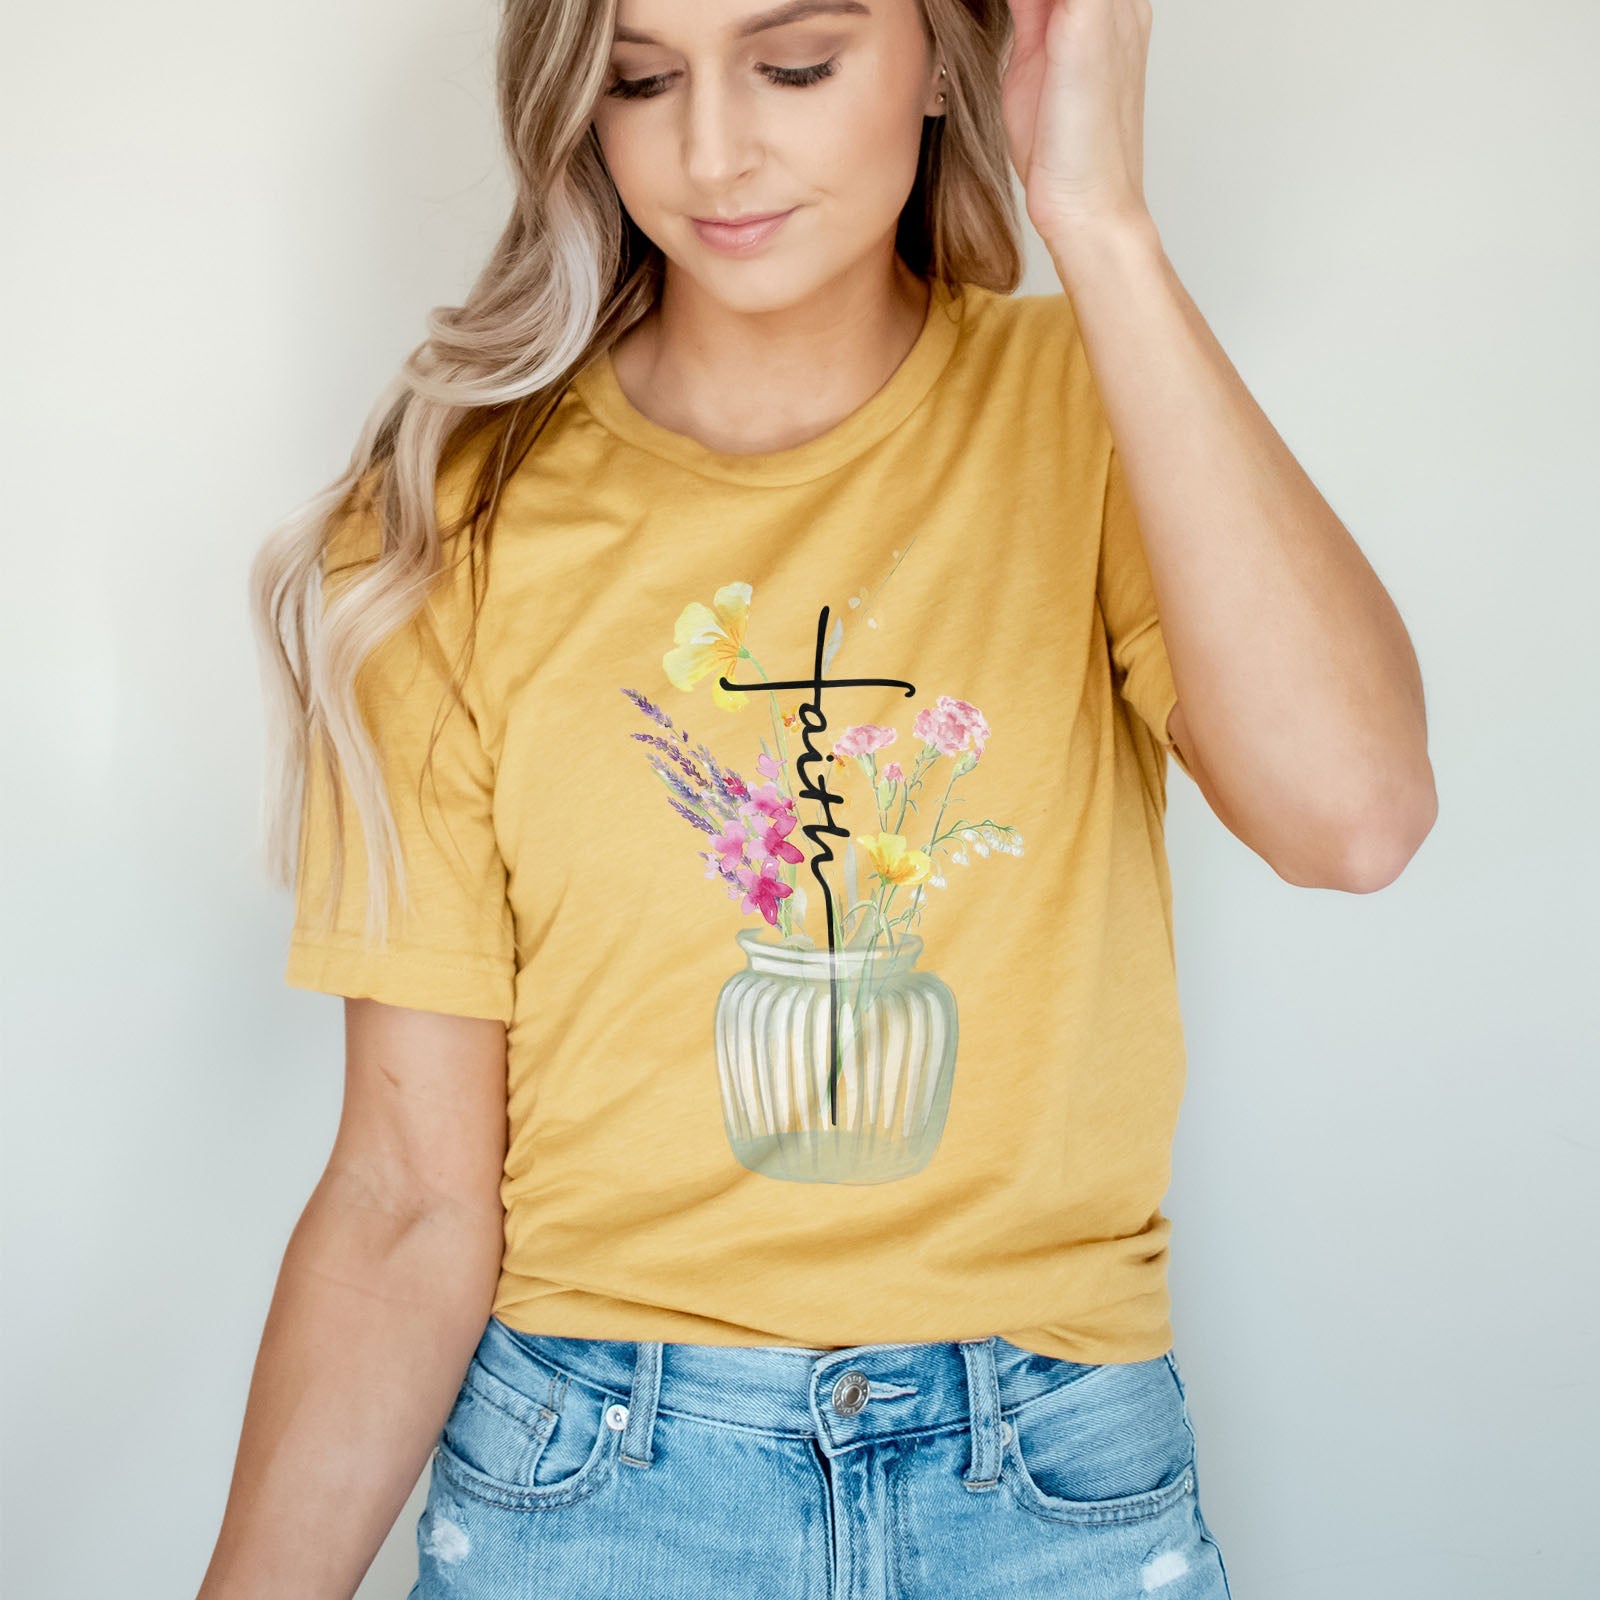 Faith Cross Vase Tee Shirts For Women - Christian Shirts for Women - Religious Tee Shirts